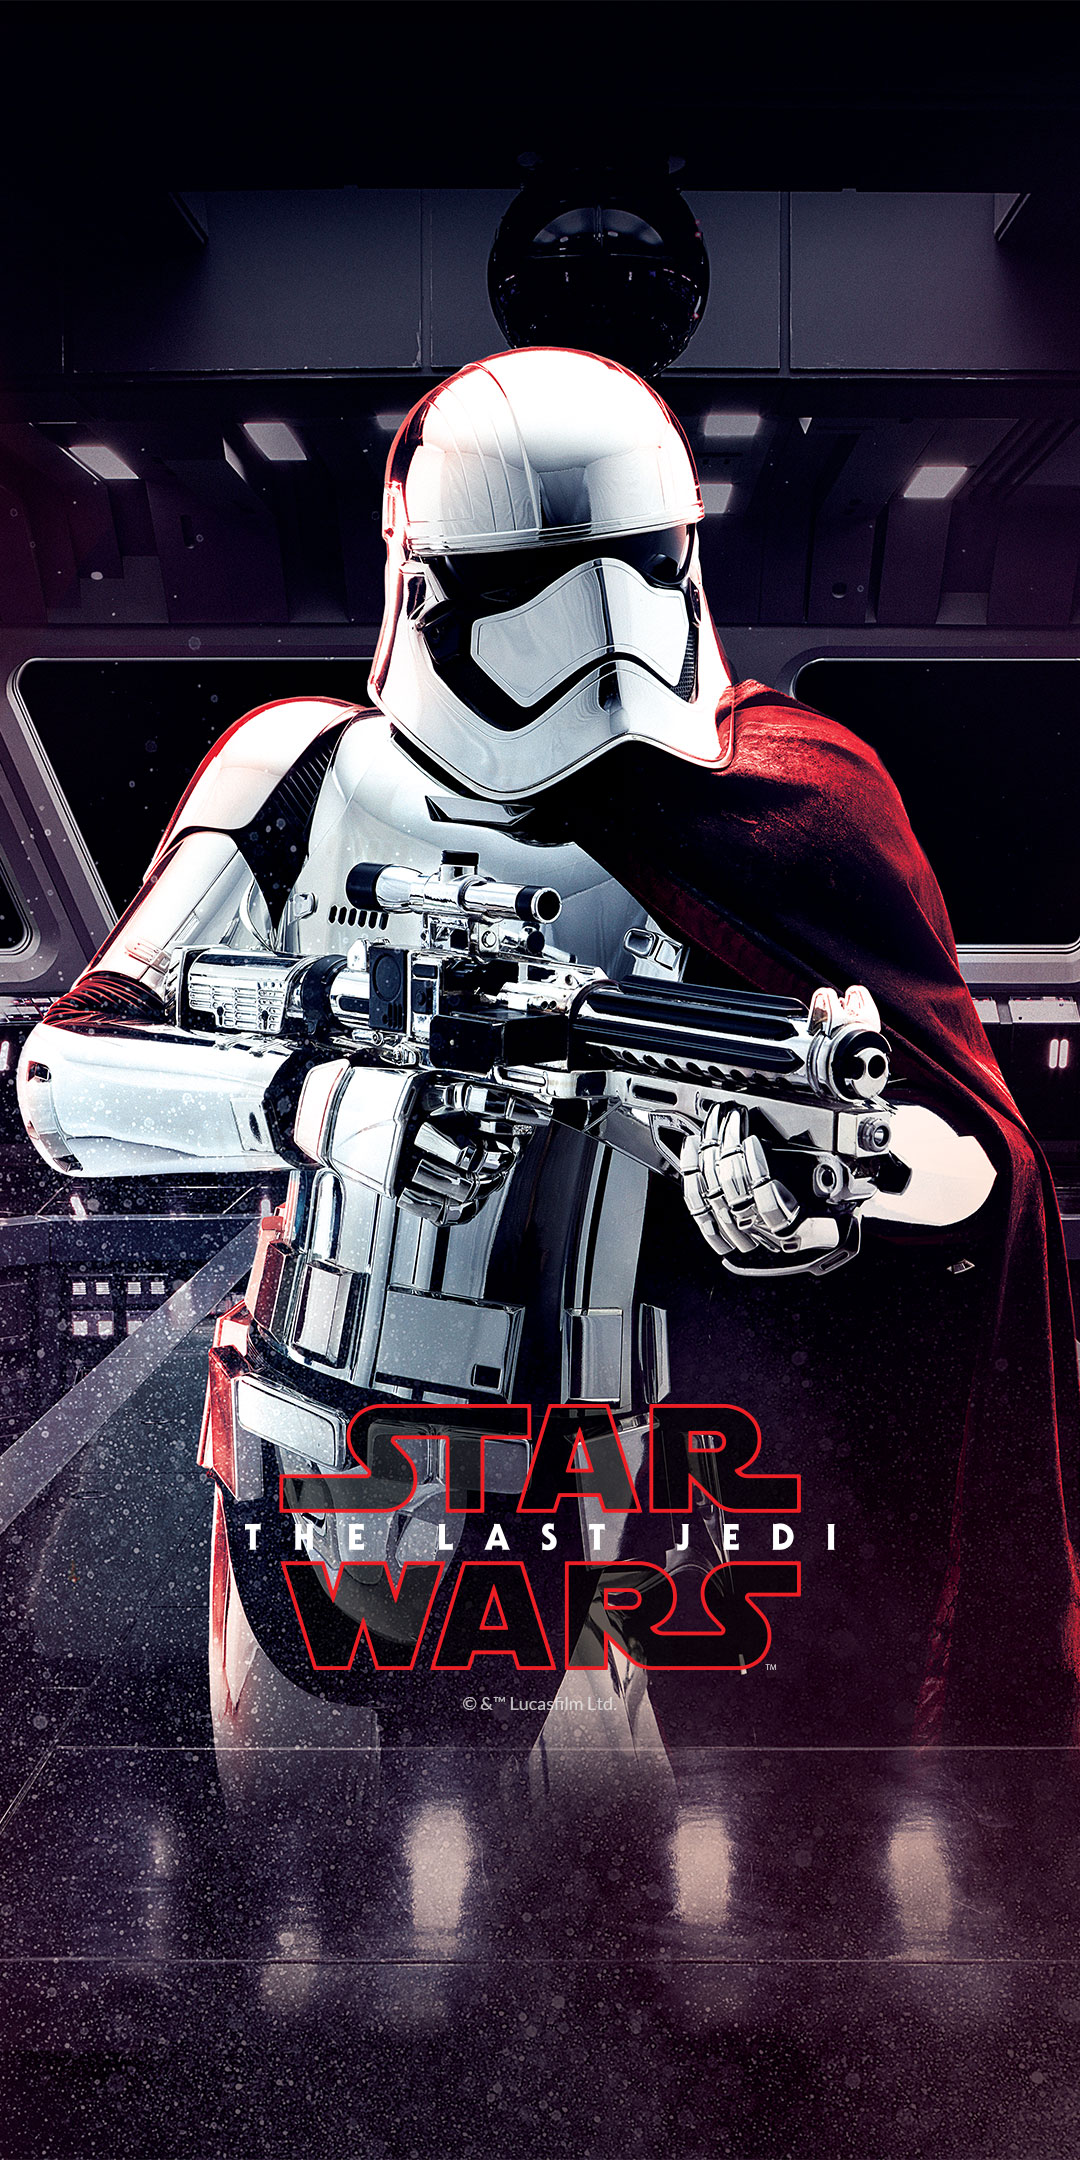 OnePlus 5T Star Wars: The Last Jedi wallpaper download leaked